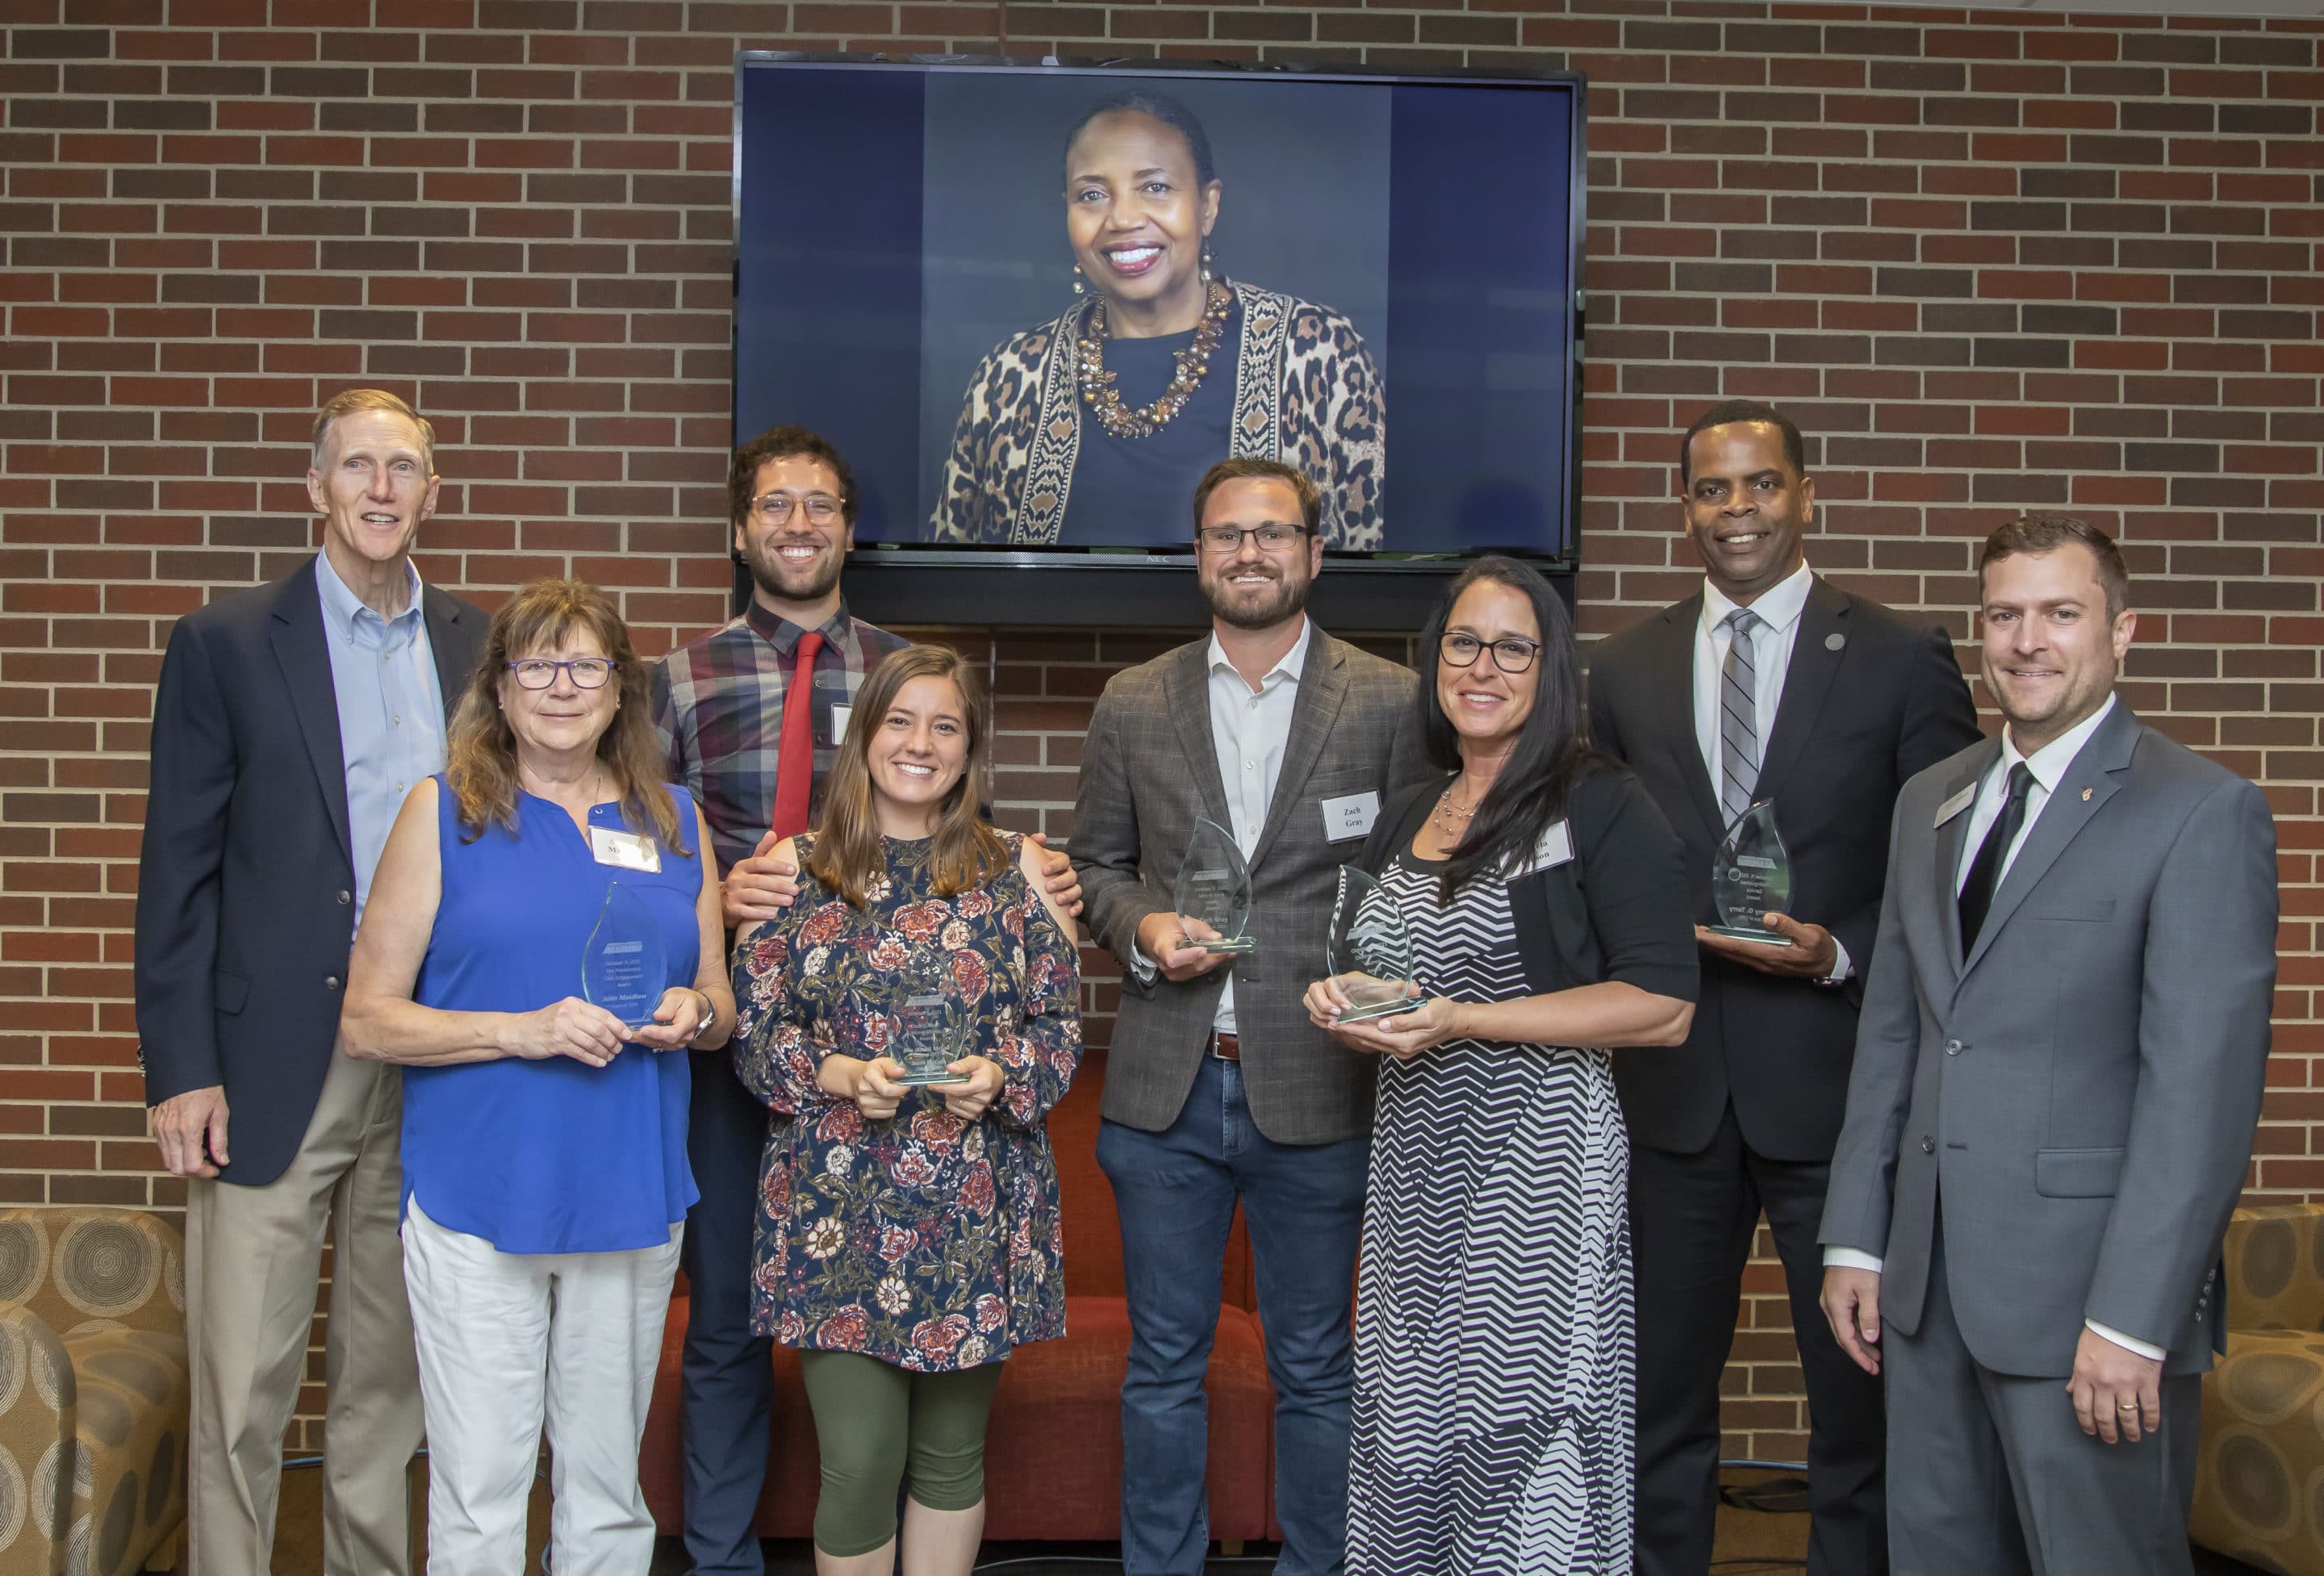 Alumni Award recipients group picture